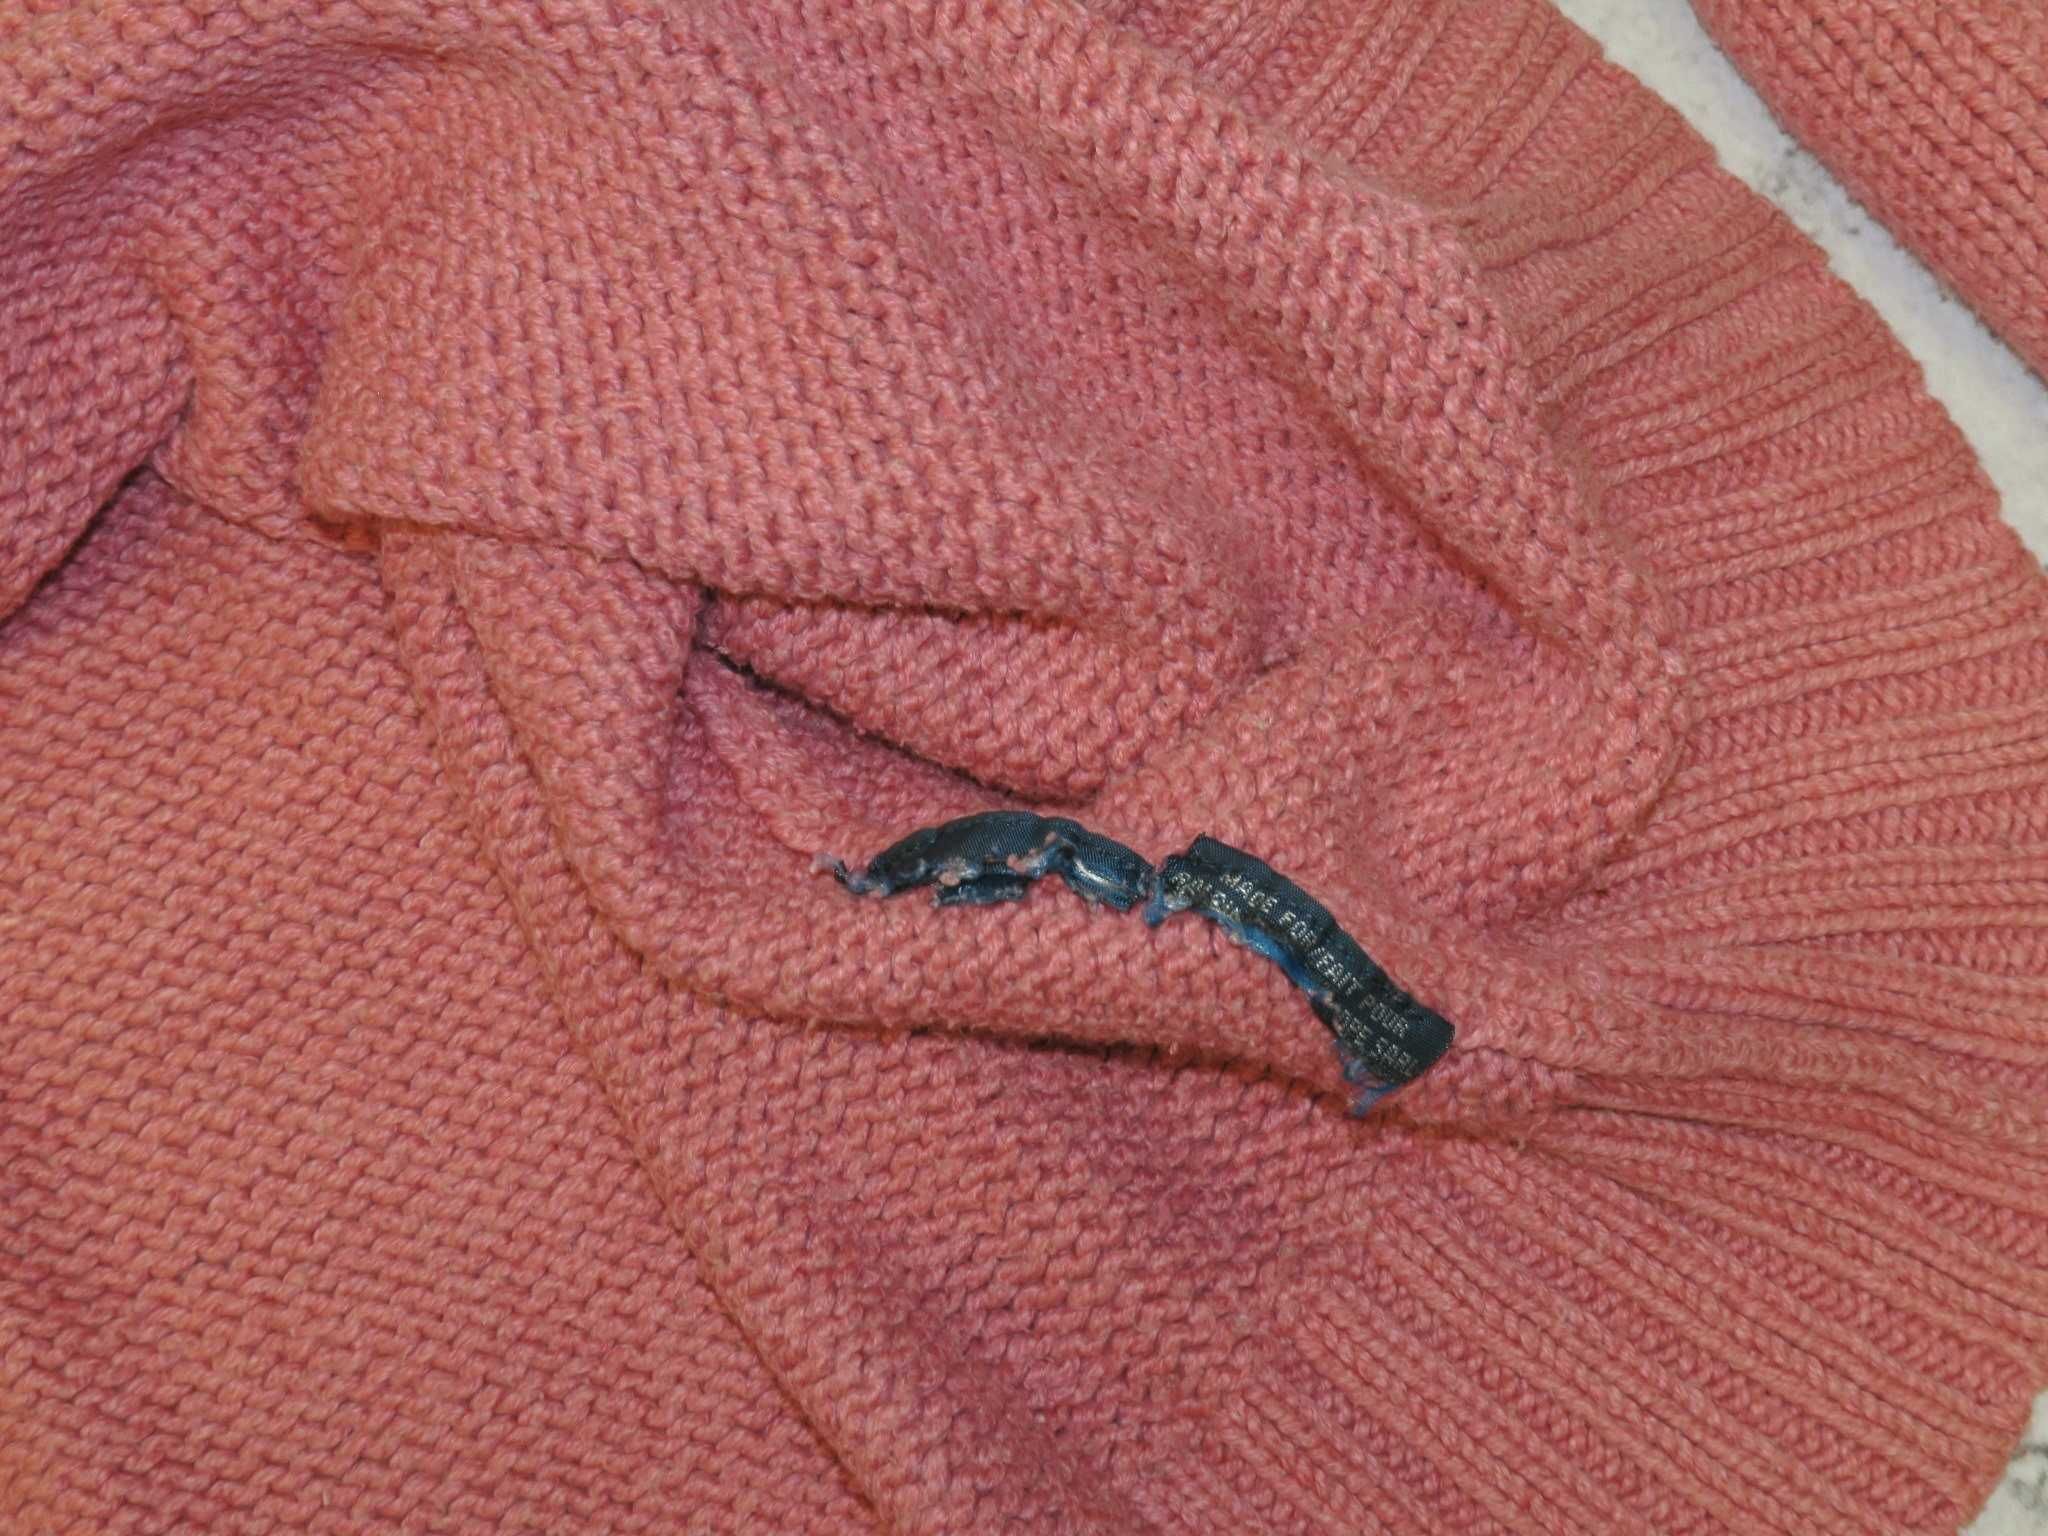 Ralph Lauren gruby sweter męski L